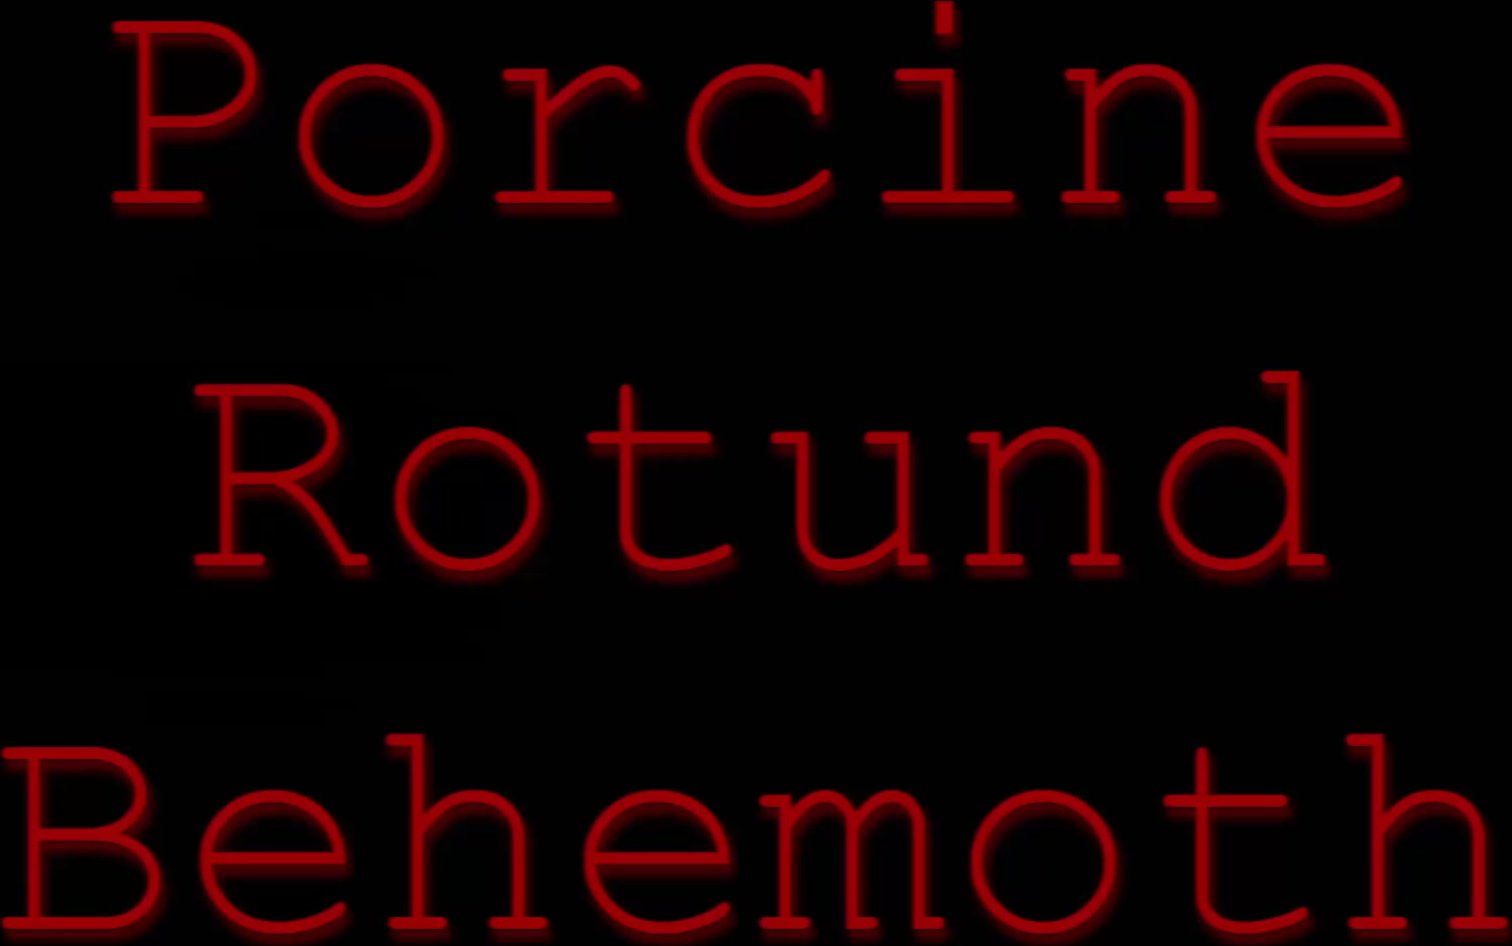 Porcine Rotund Behemoth worst video so far